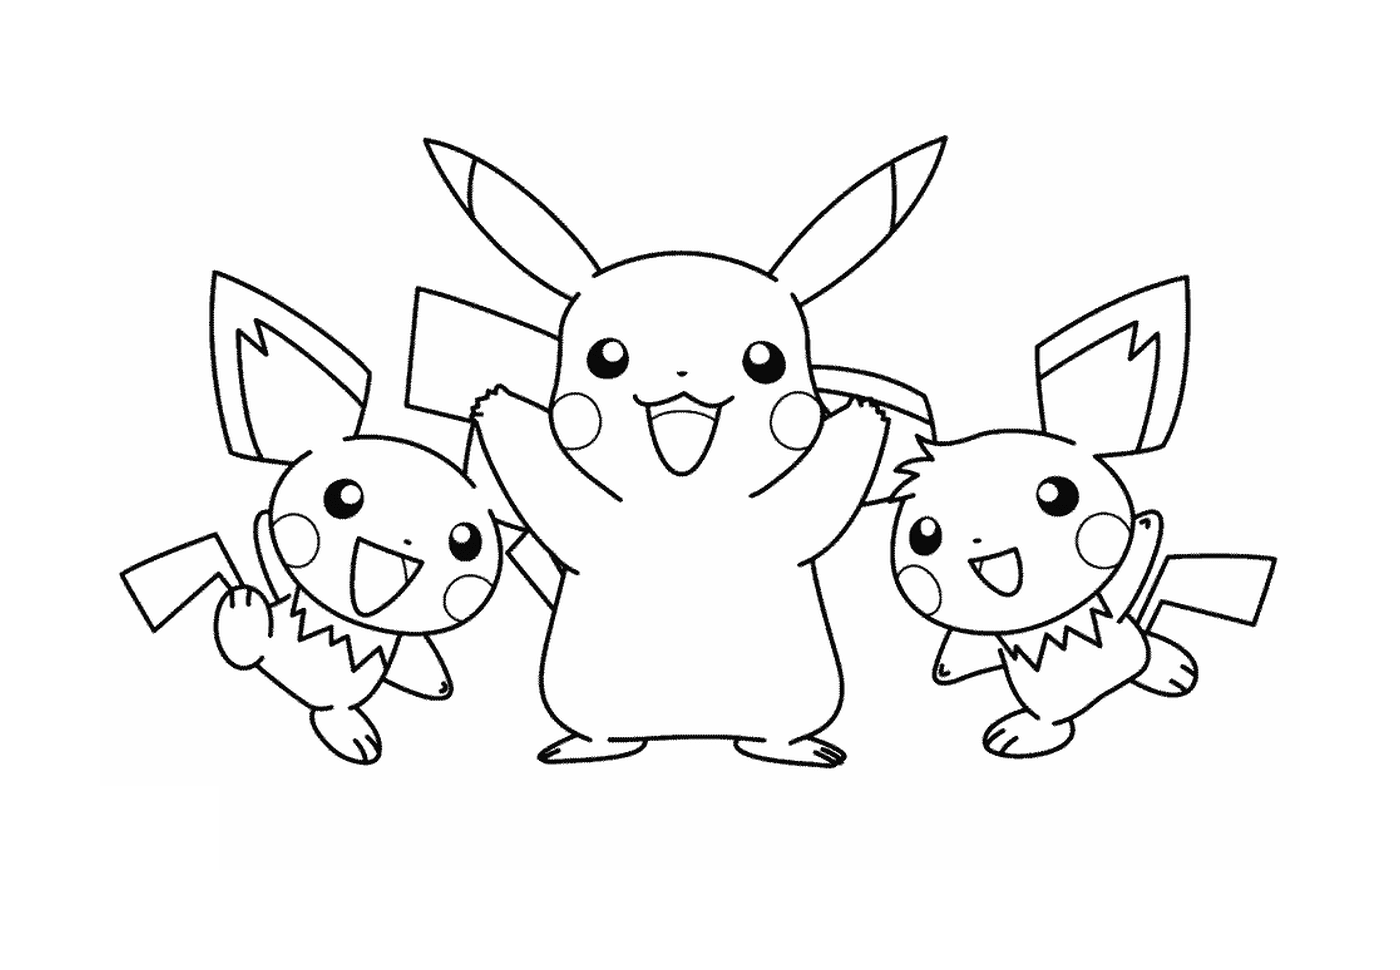  Tre personaggi Pikachu insieme 